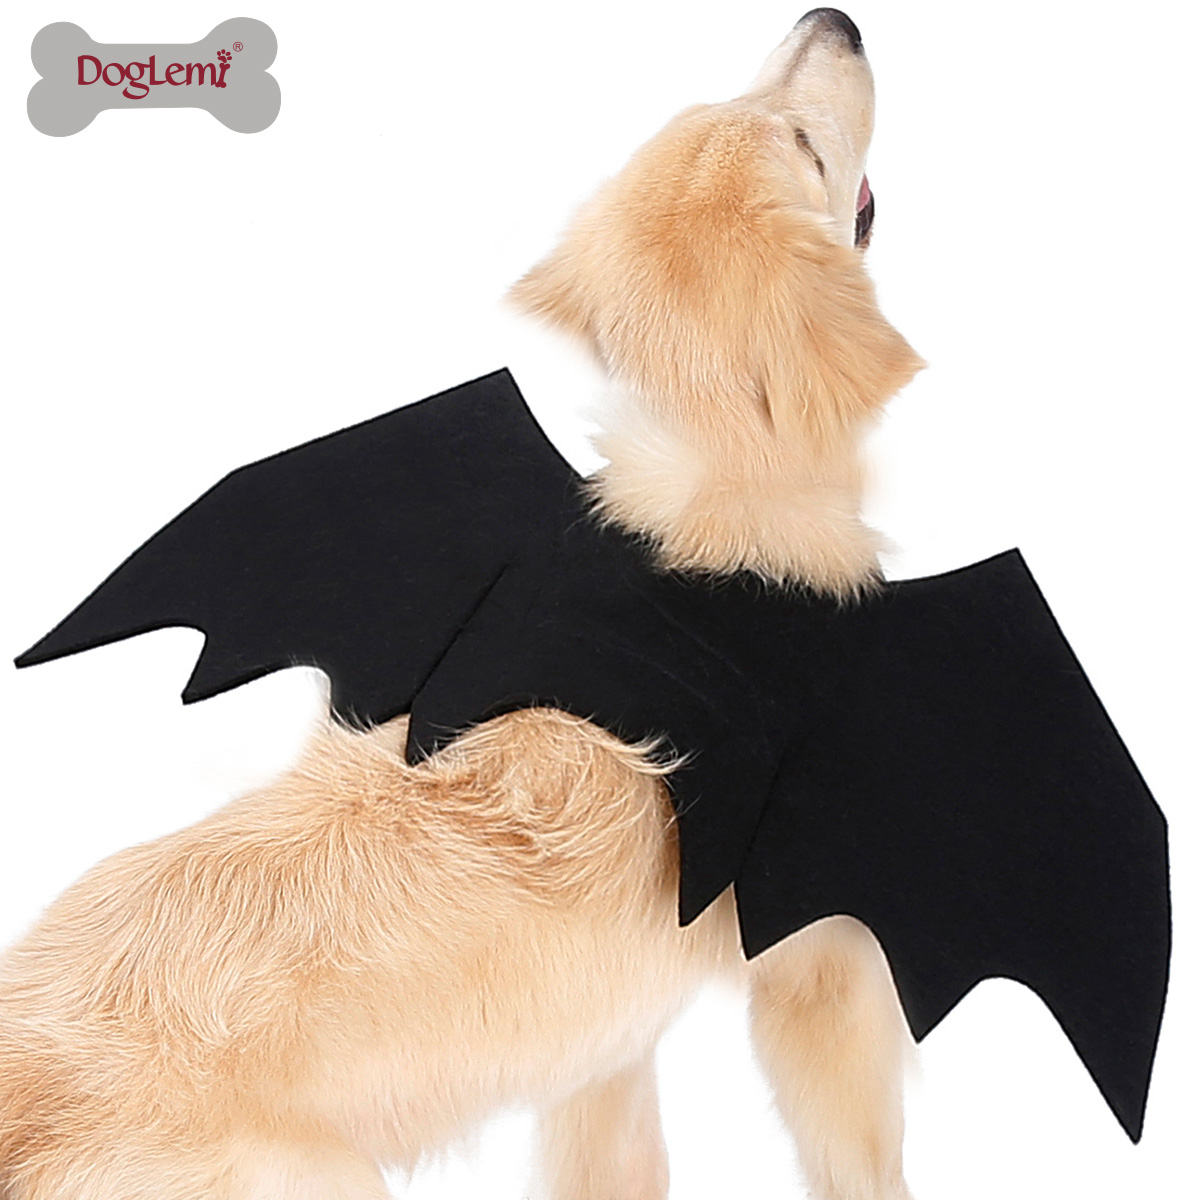 Alas de murciélago perro mascota de Halloween